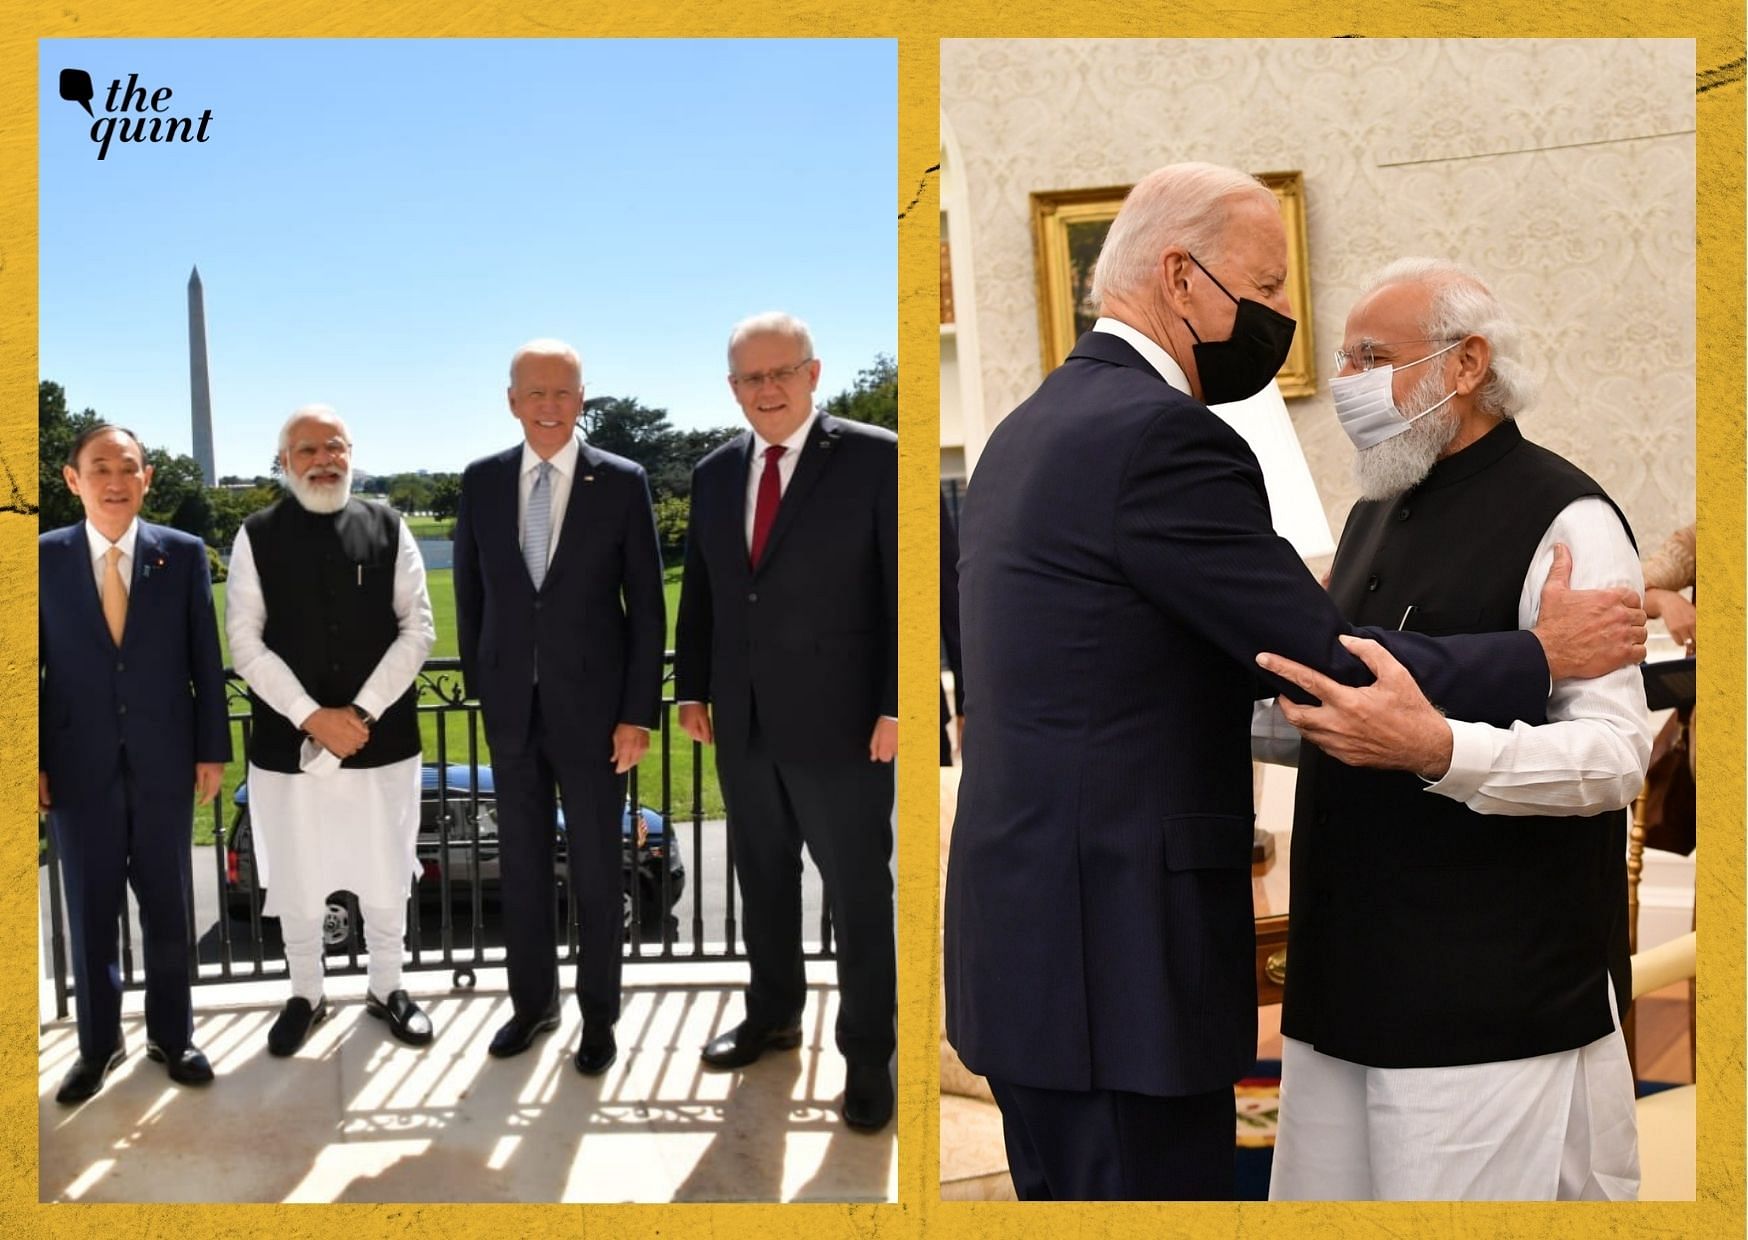 <div class="paragraphs"><p><a href="https://www.thequint.com/news/india/pm-narendra-modi-us-visit-joe-biden-kamala-harris-unga-quad-summit-live-updates#2">The Quad summit</a> began on Friday, 24 September, at the White House, with Prime Minister Narendra Modi, US President Joe Biden, Australian PM Scott Morrison and Japanese PM Yoshihide Suga in attendance. </p></div>